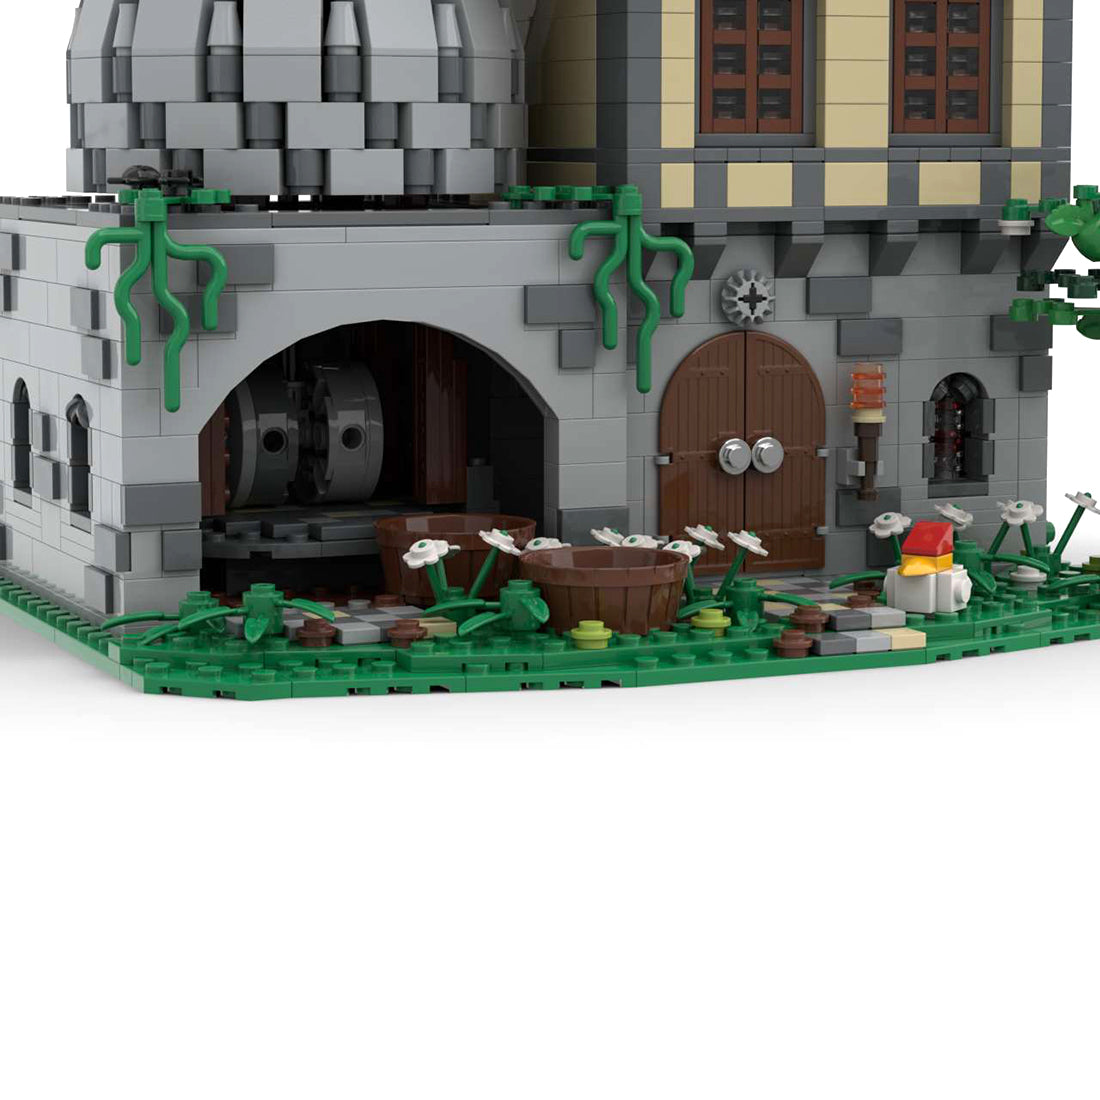 MOC-31613 Medieval Street Dynamic Castle Windmill for Lego